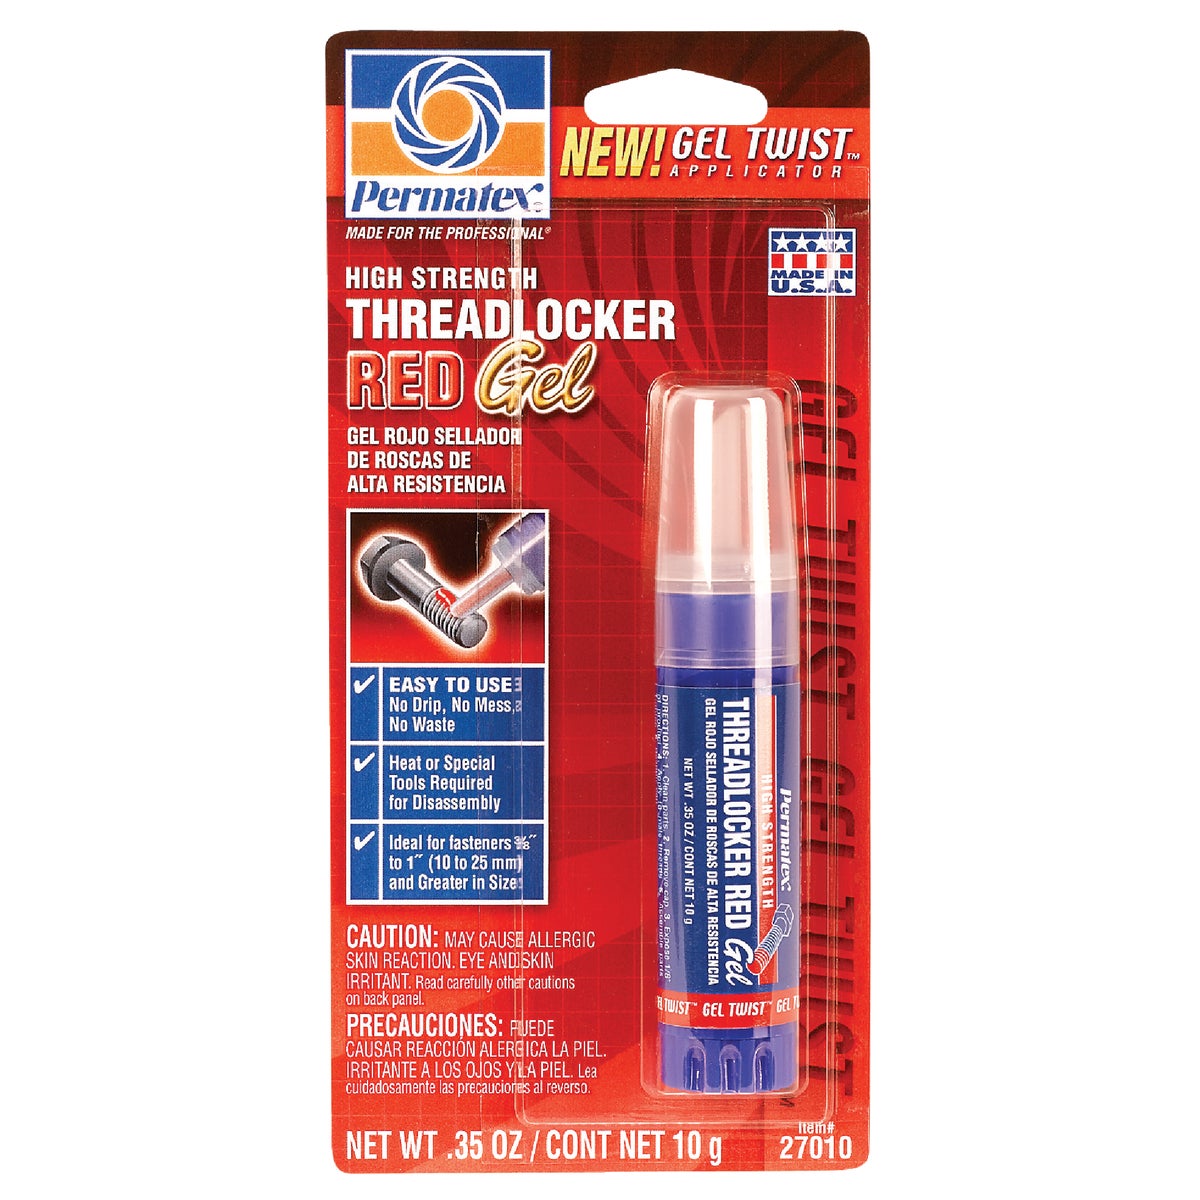 Item 580954, Permatex red gel threadlocker in the Gel Twist pin point applicator.